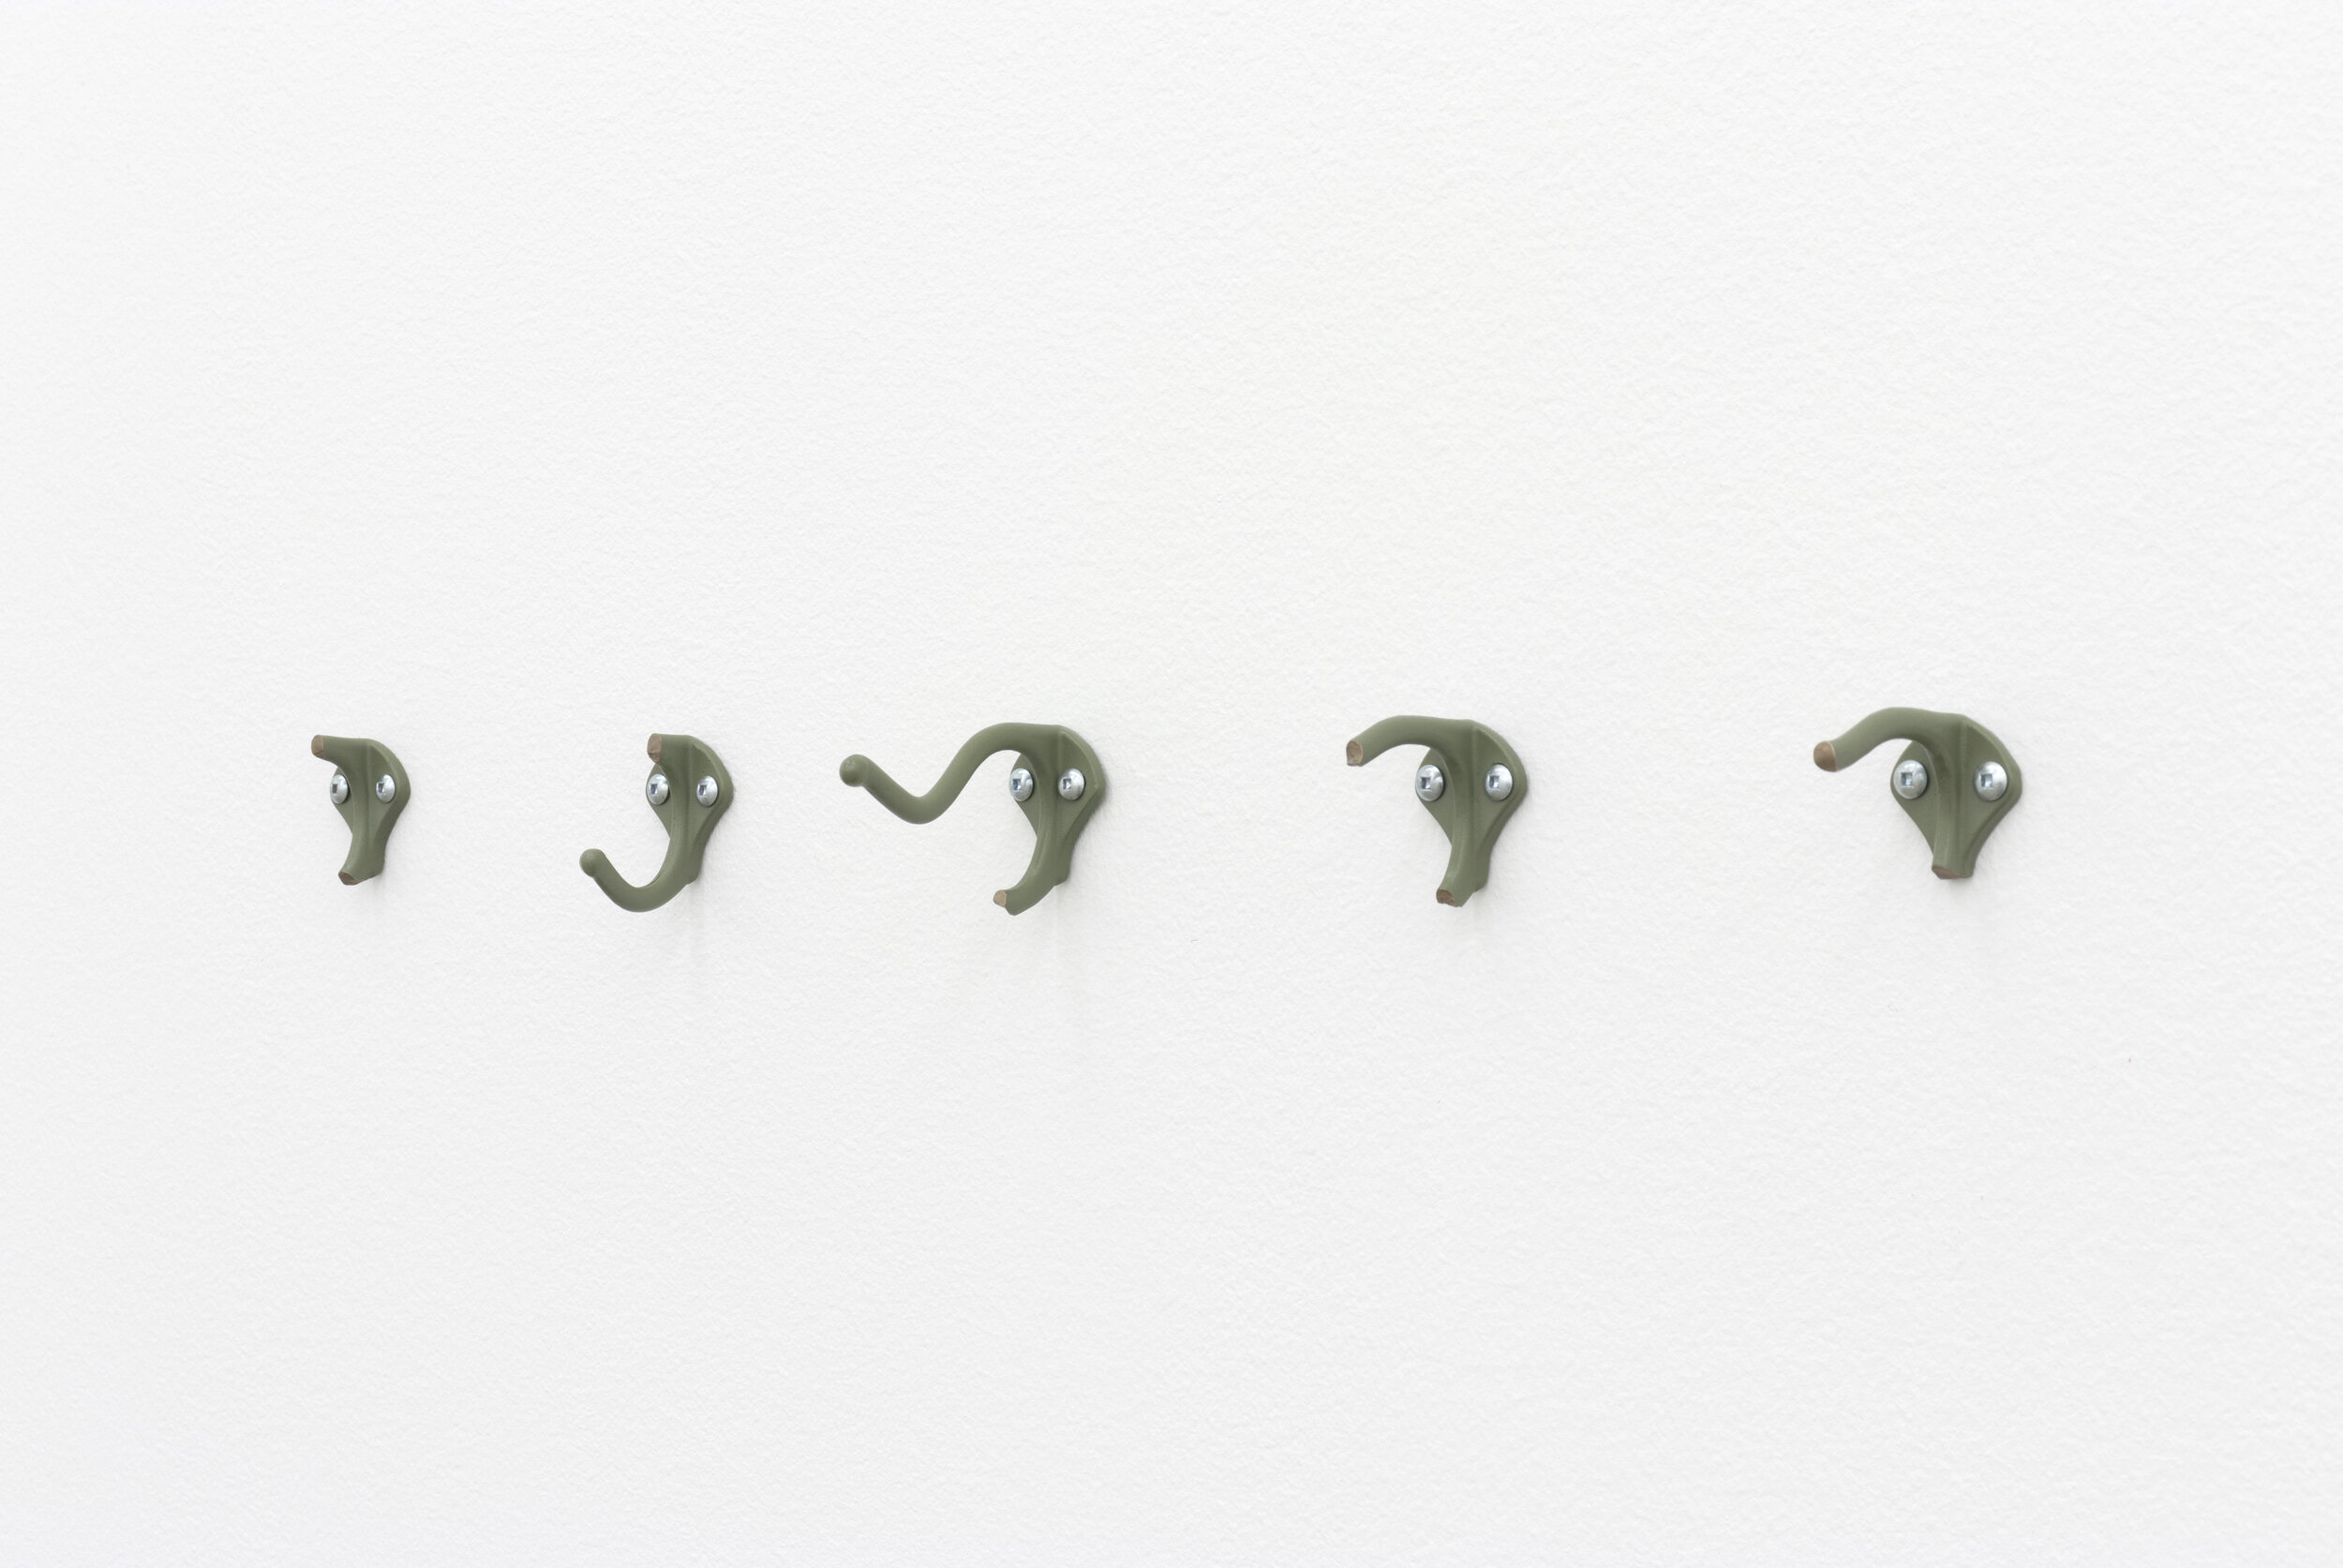  Vanessa Maltese   Hook no. 4 , 2020  patinated bronze, wax, hardware  variable dimensions 